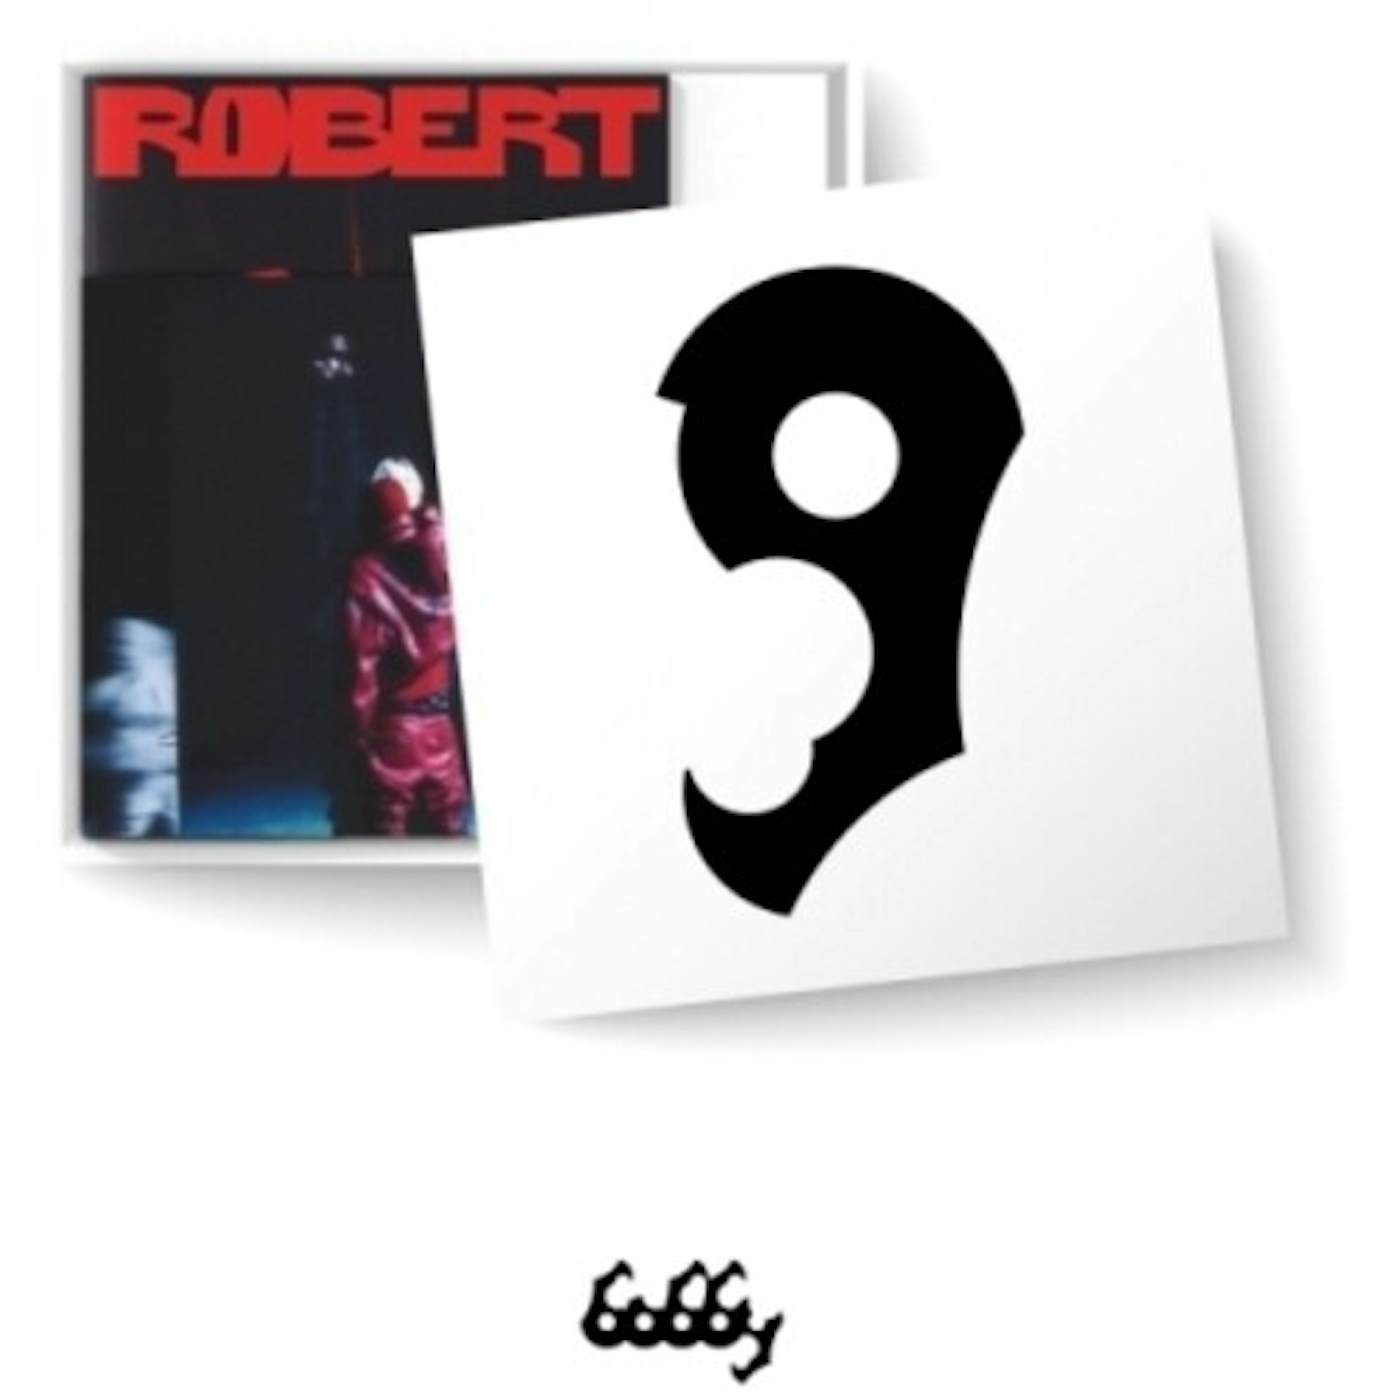 B.o.B ROBERT - RANDOM COVER CD